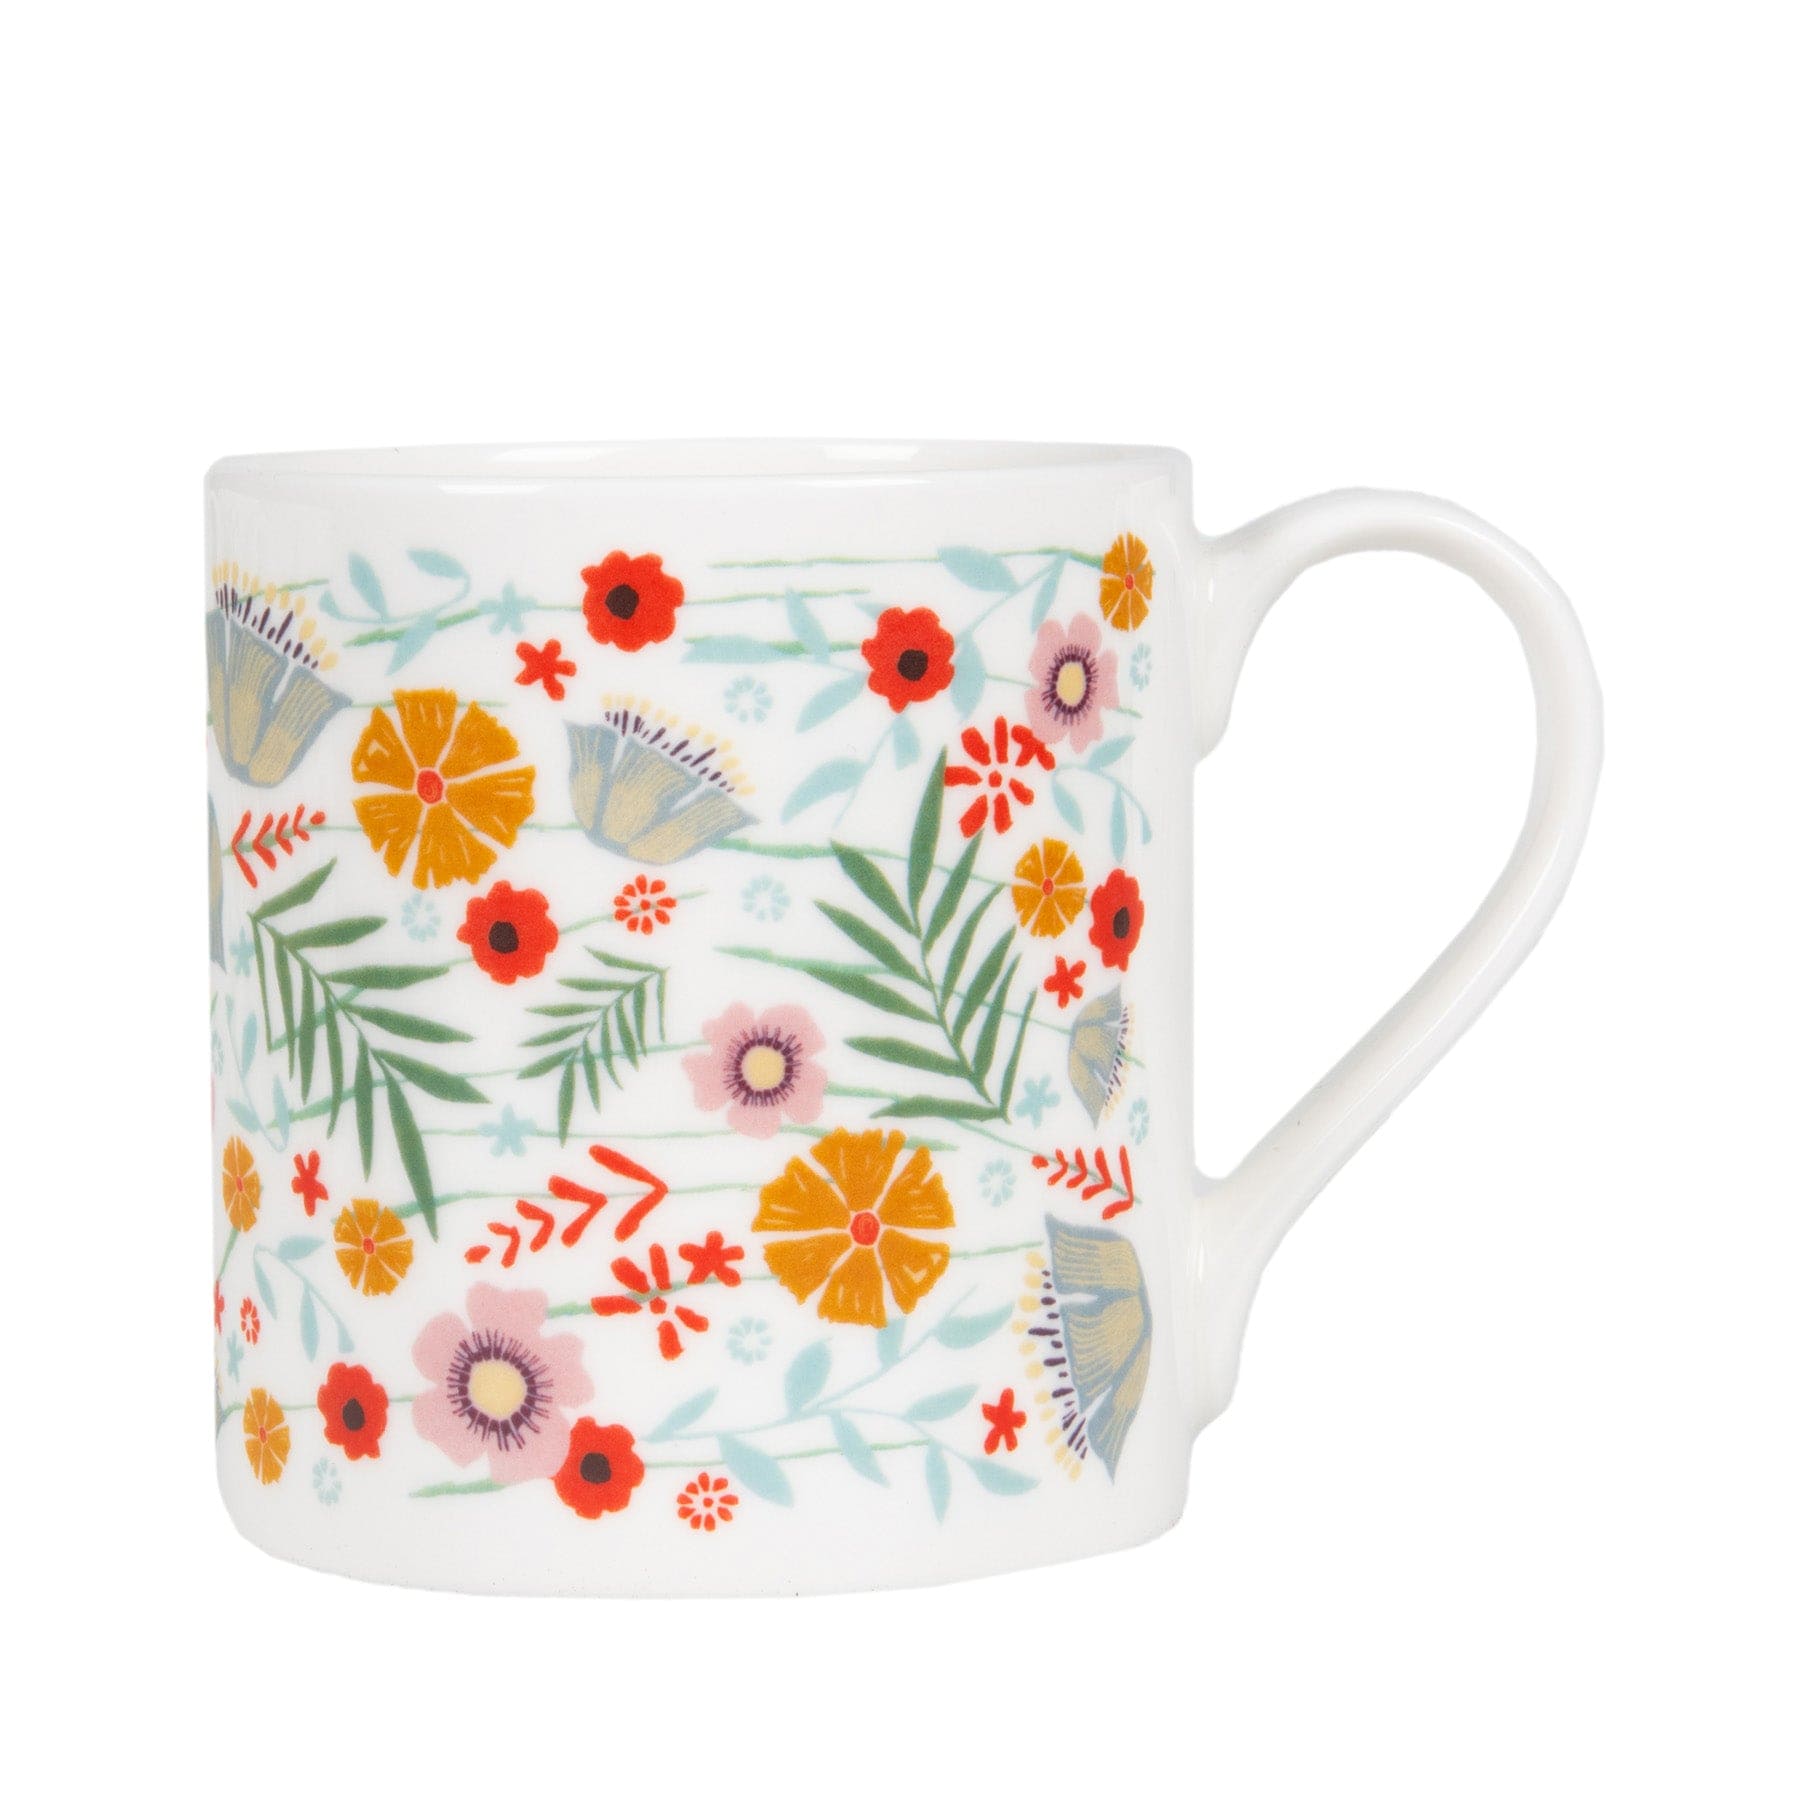 Floral print mug